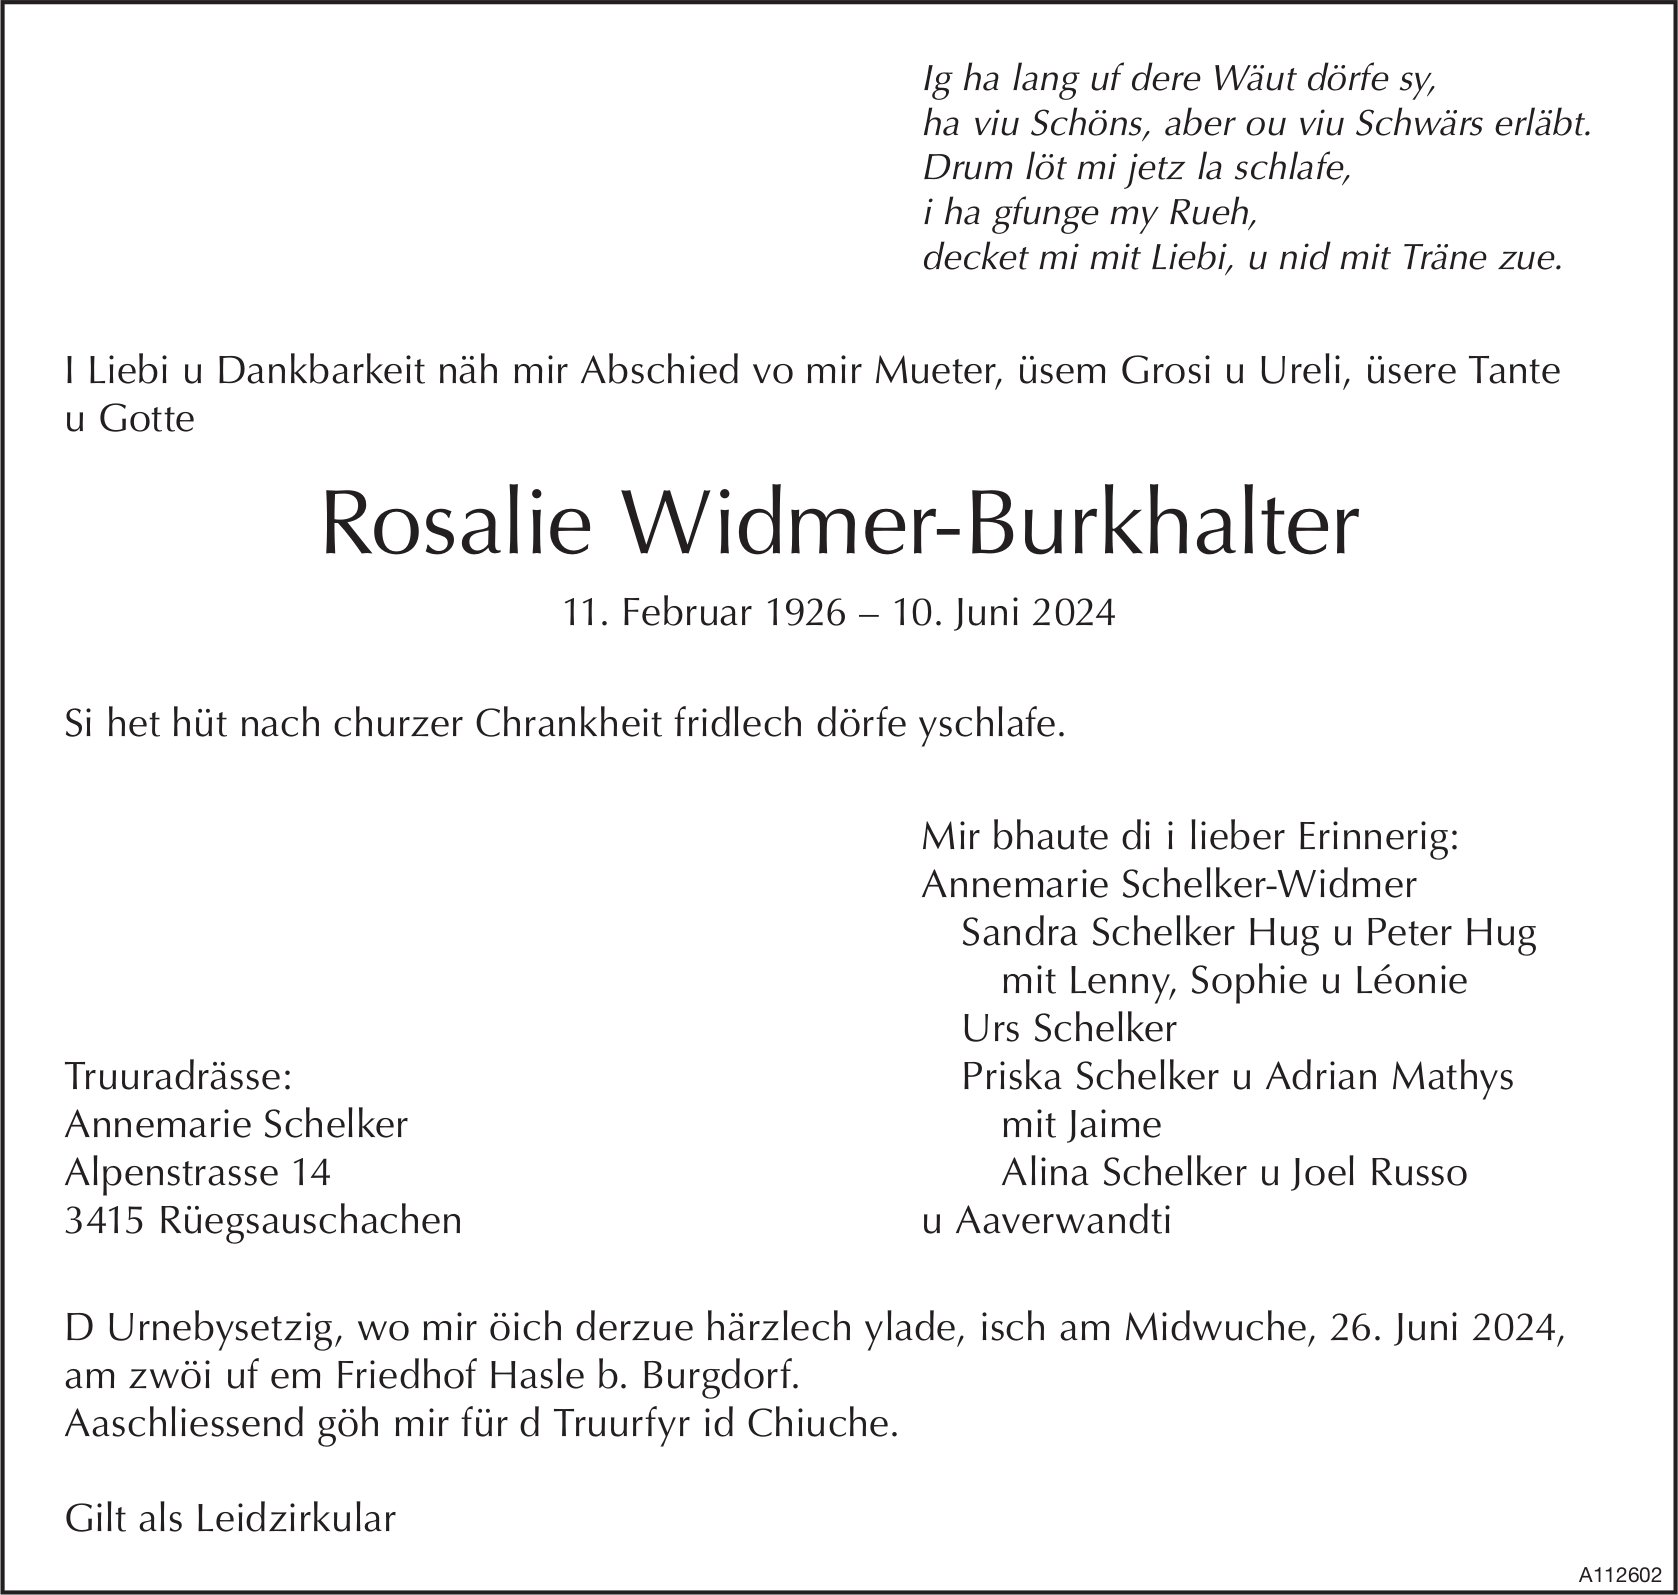 Rosalie Widmer-Burkhalter, Juni 2024 / TA